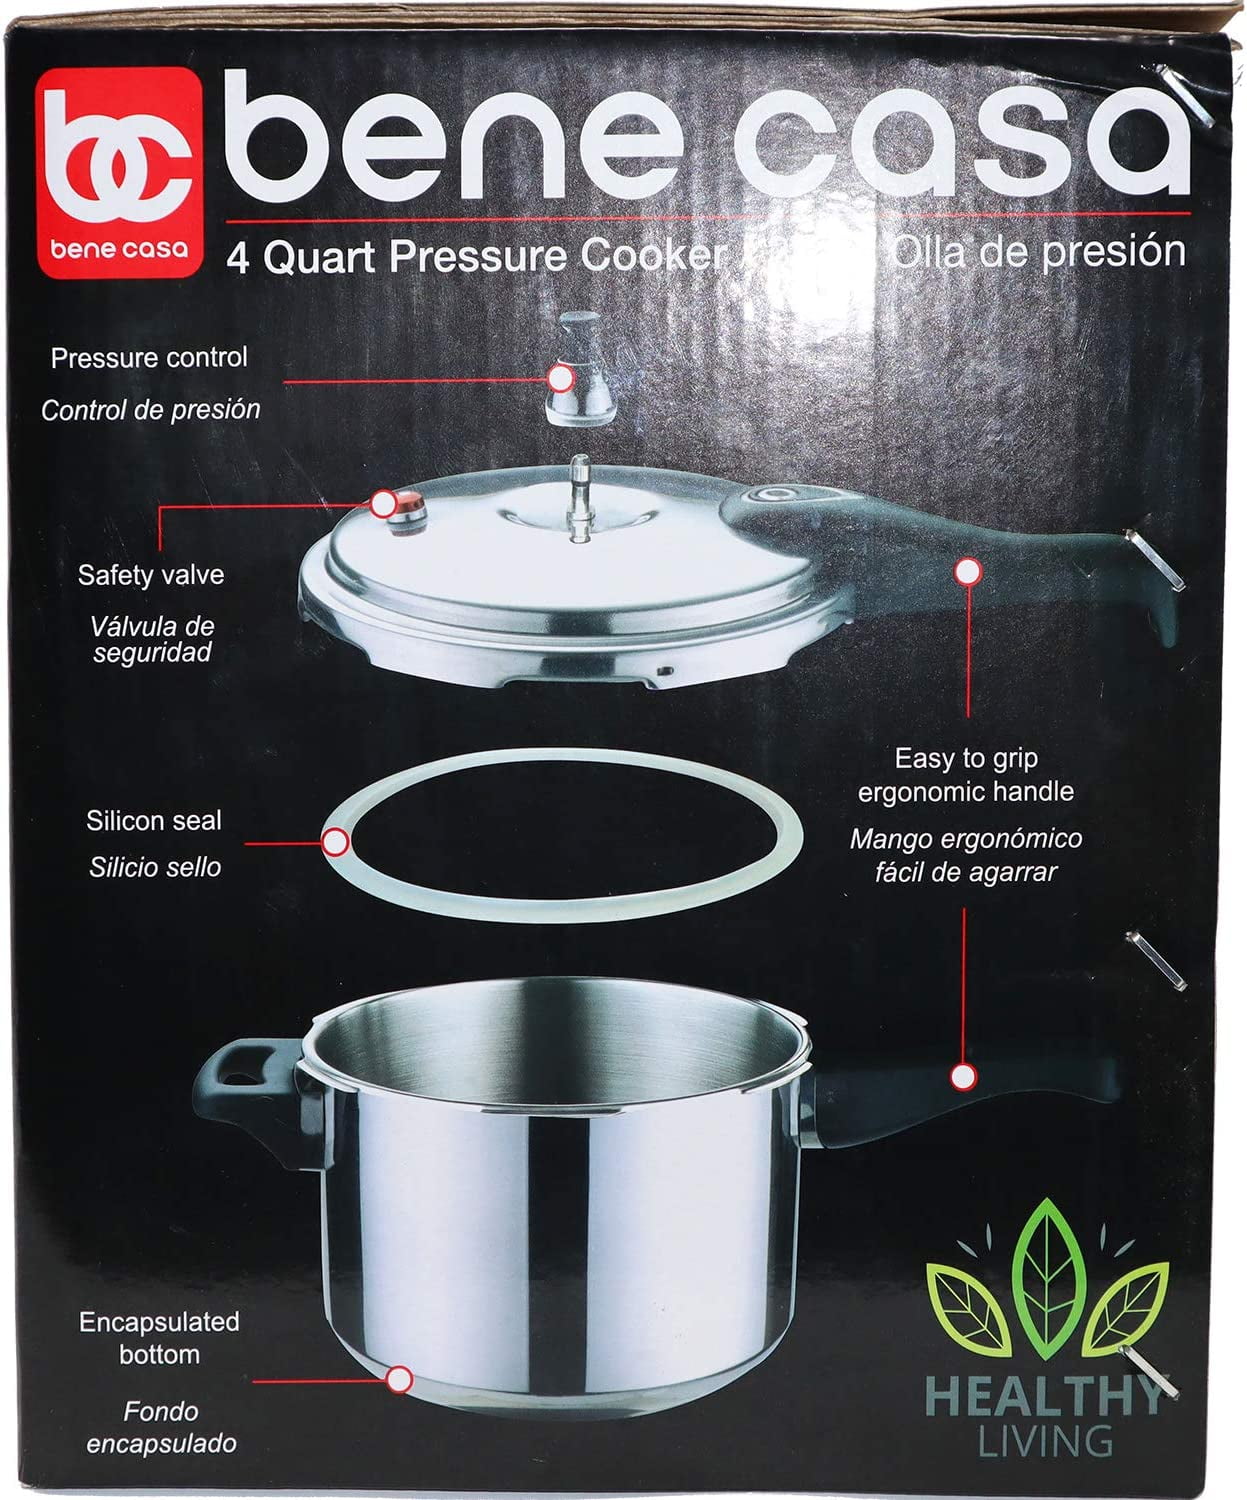 Bene Casa - Aluminum Pressure Cooker (4 Quart) - Includes Pressure Alarm  and a Sure-locking Lid System - Dishwasher Safe